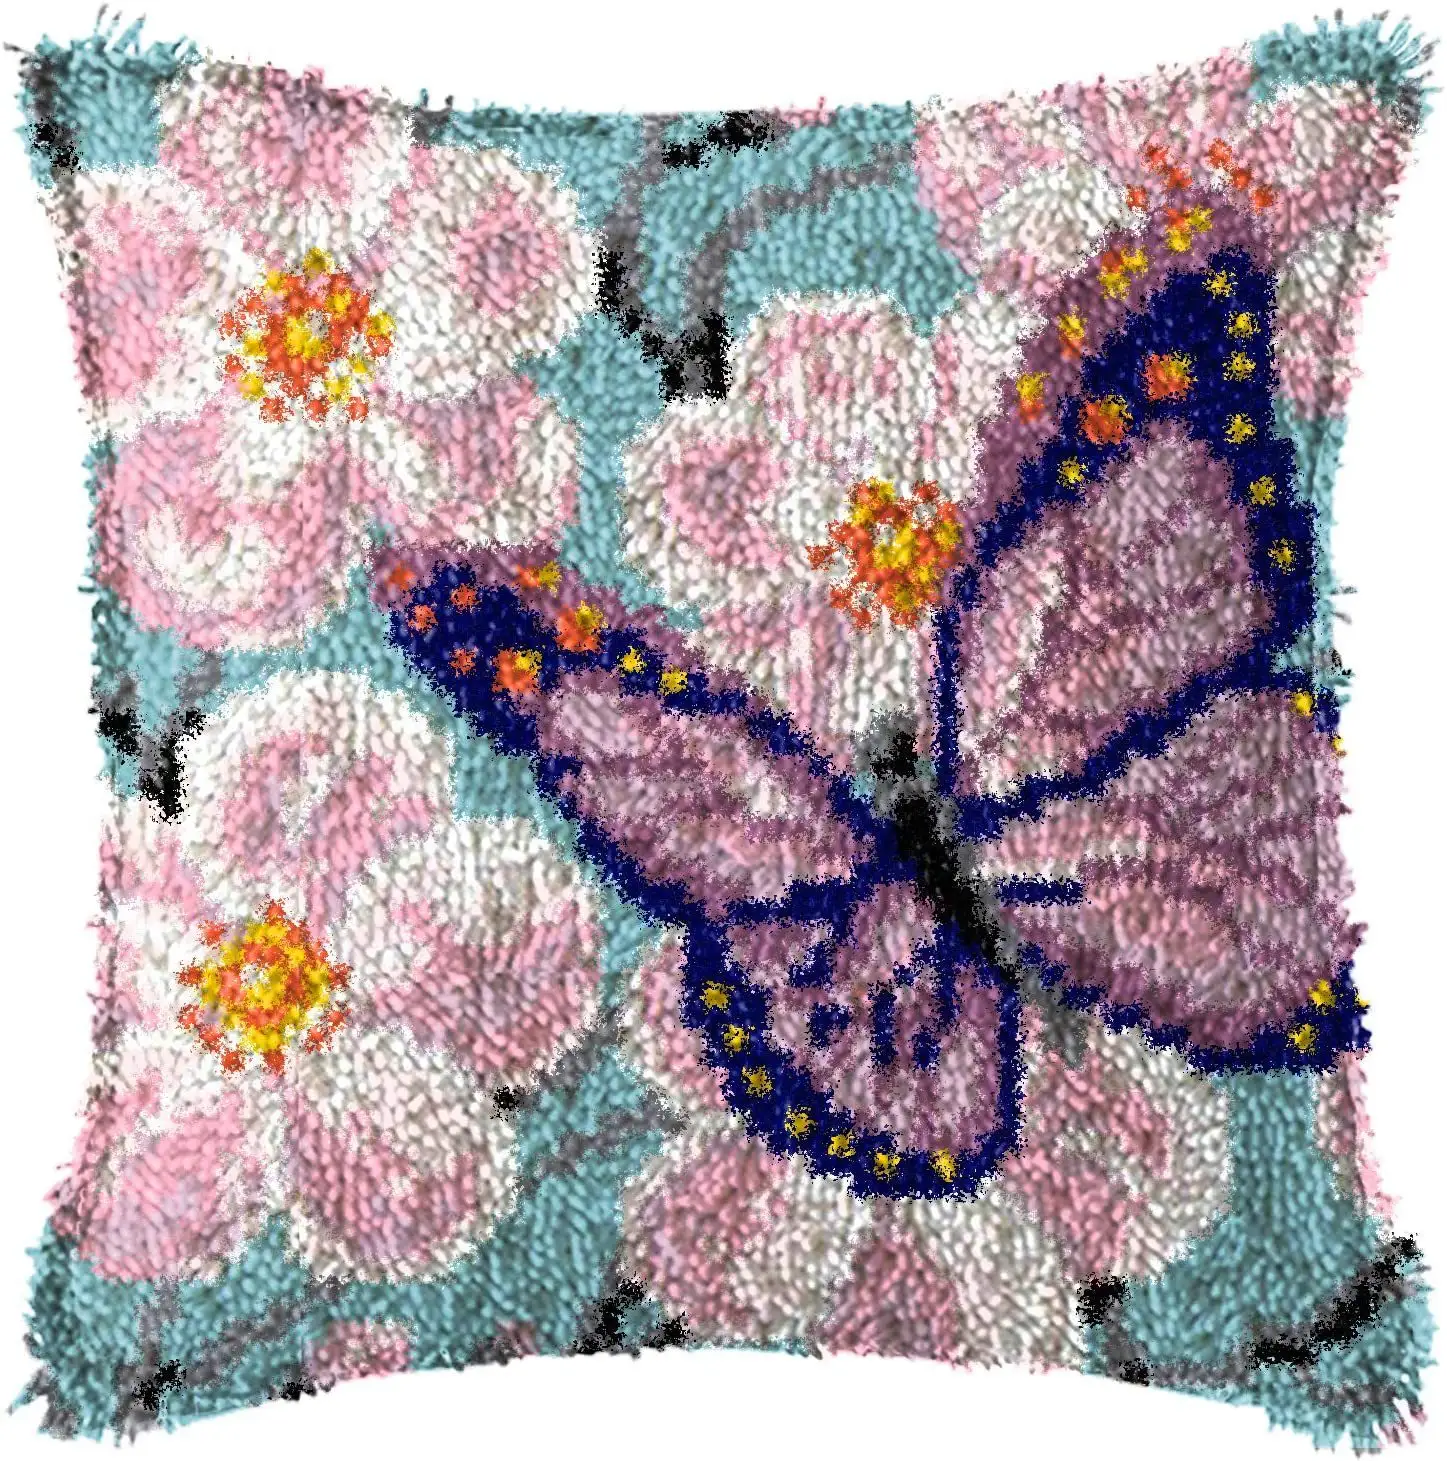 Wholesale animal pillowcase latch hook kits new cross stitch embroidery diy cartoon latch hook pillow kits for beginners